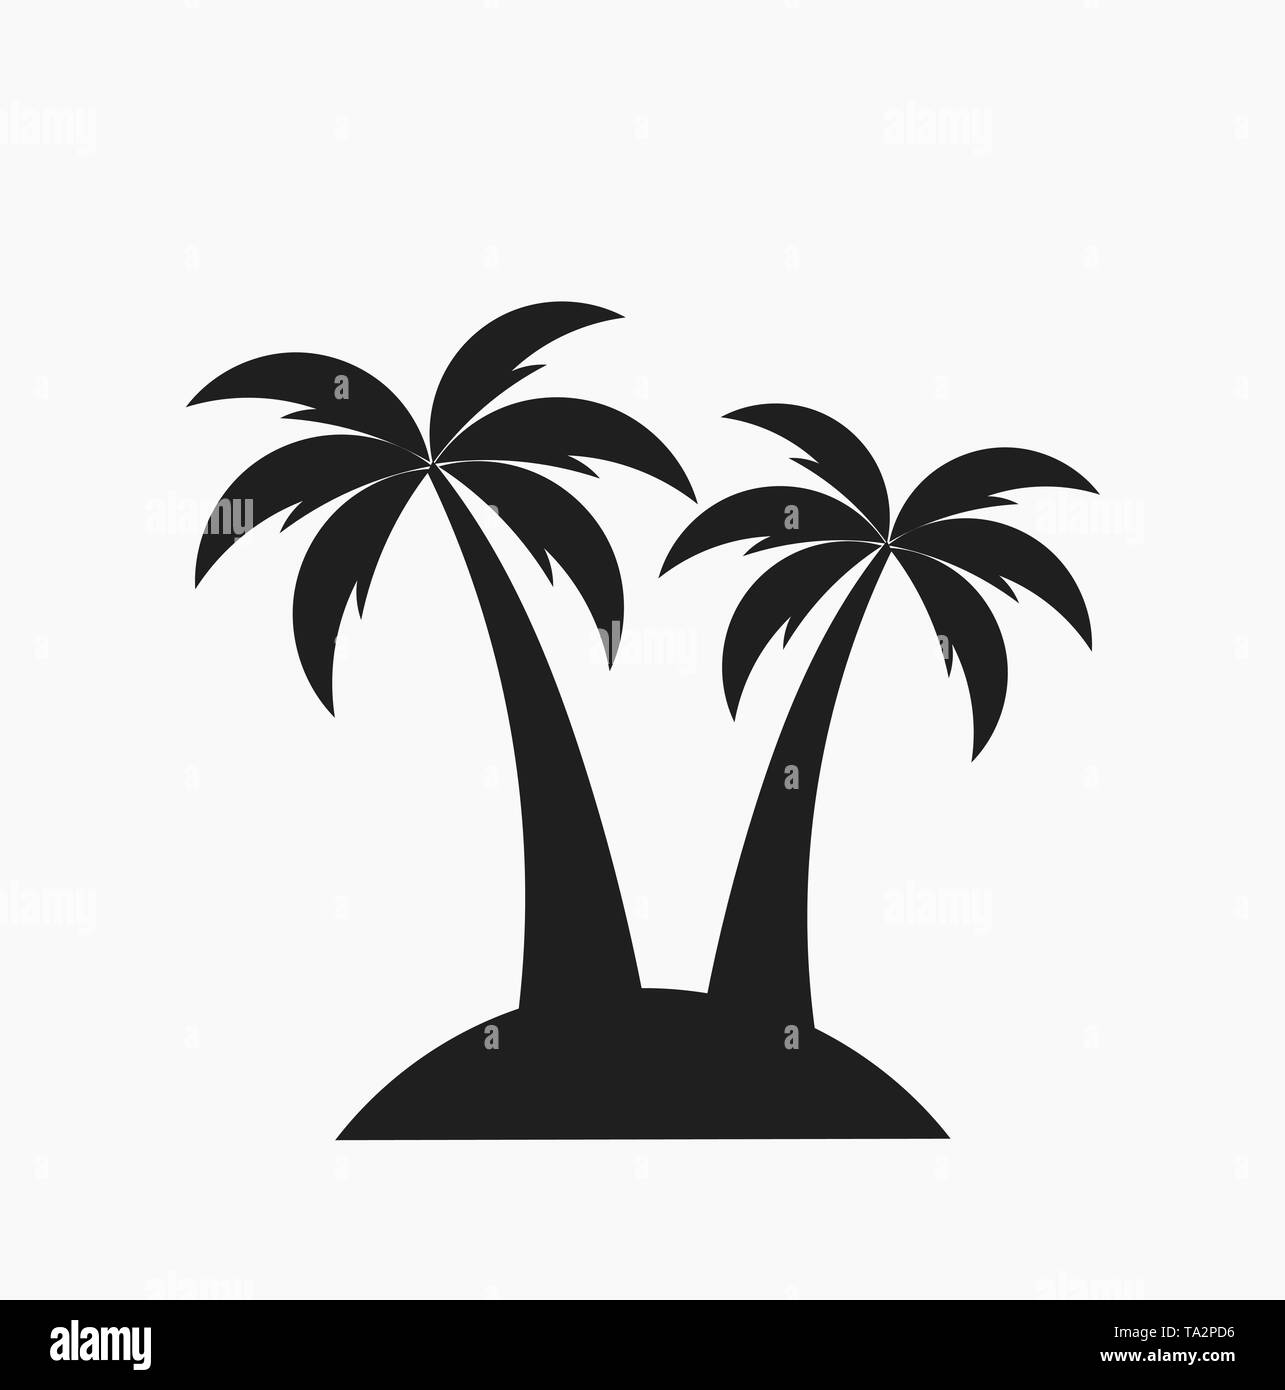 https://c8.alamy.com/comp/TA2PD6/two-palm-trees-on-island-vector-illustration-TA2PD6.jpg